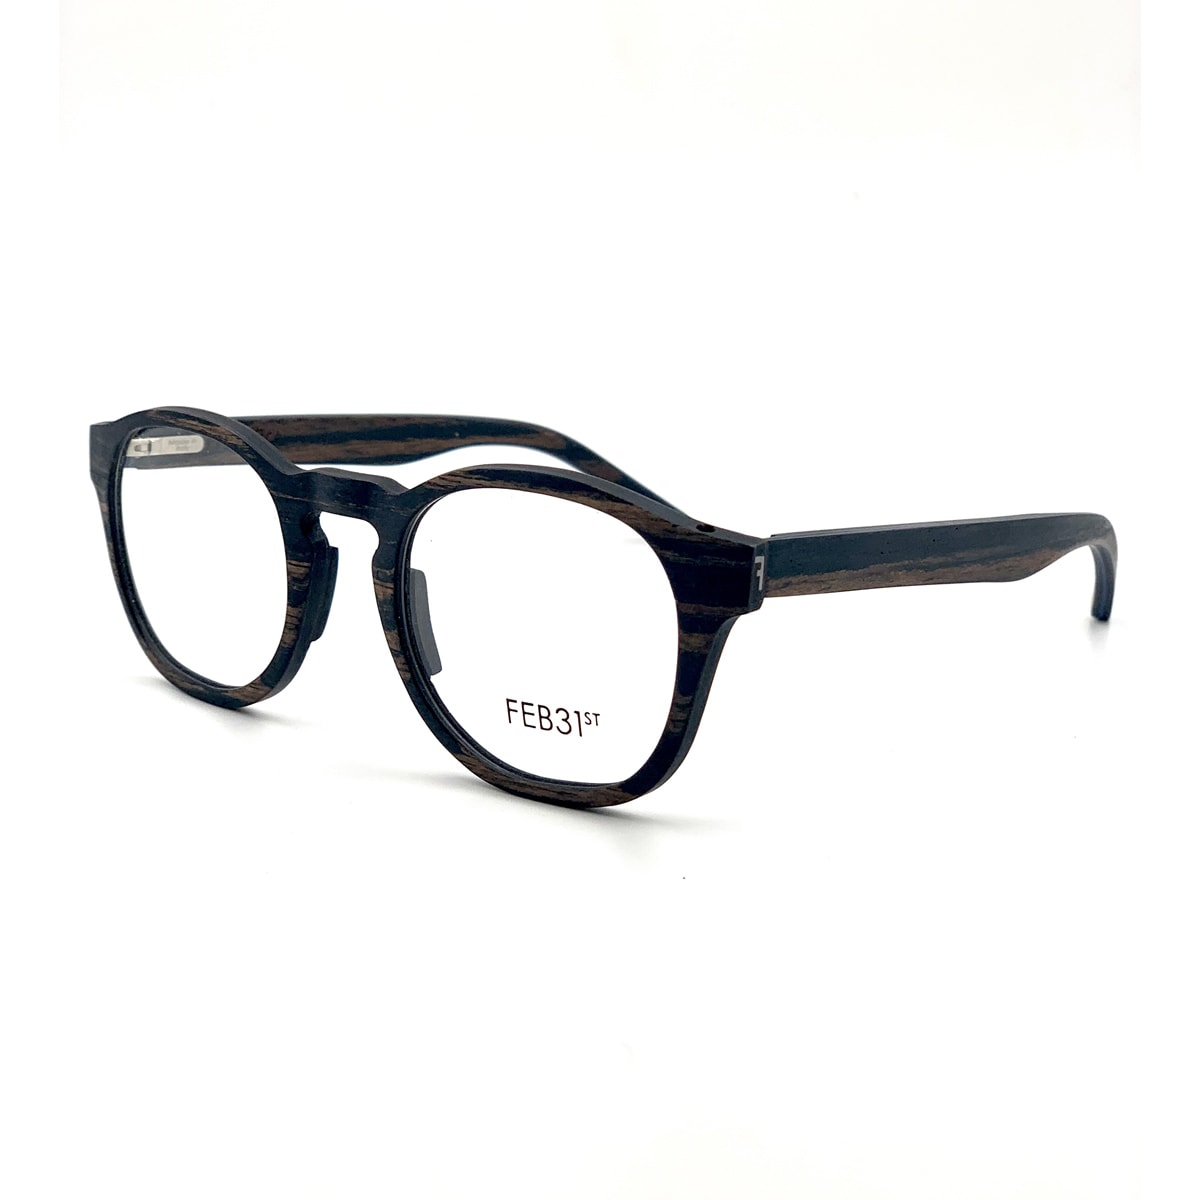 Feb31st Pavo Marrone Glasses